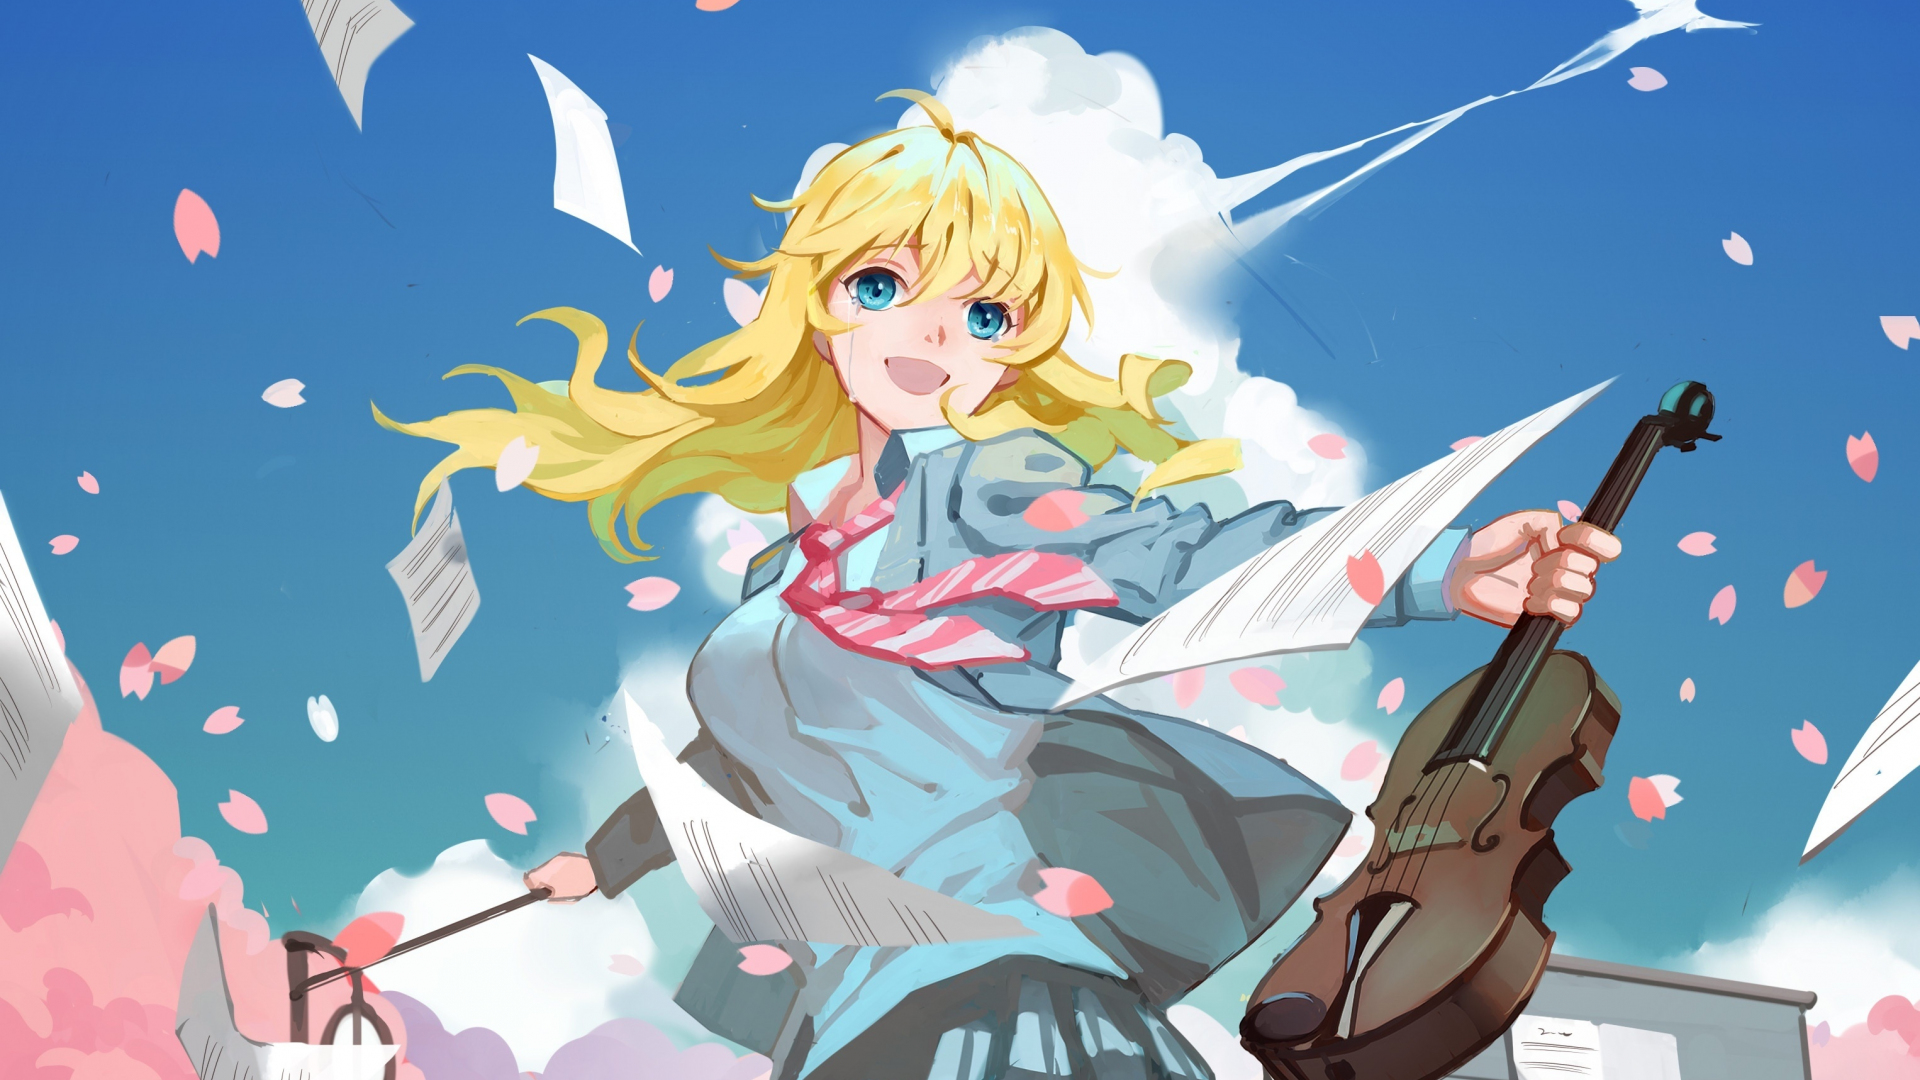 Download 1920x1080 Wallpaper Artwork Anime Girl Kaori